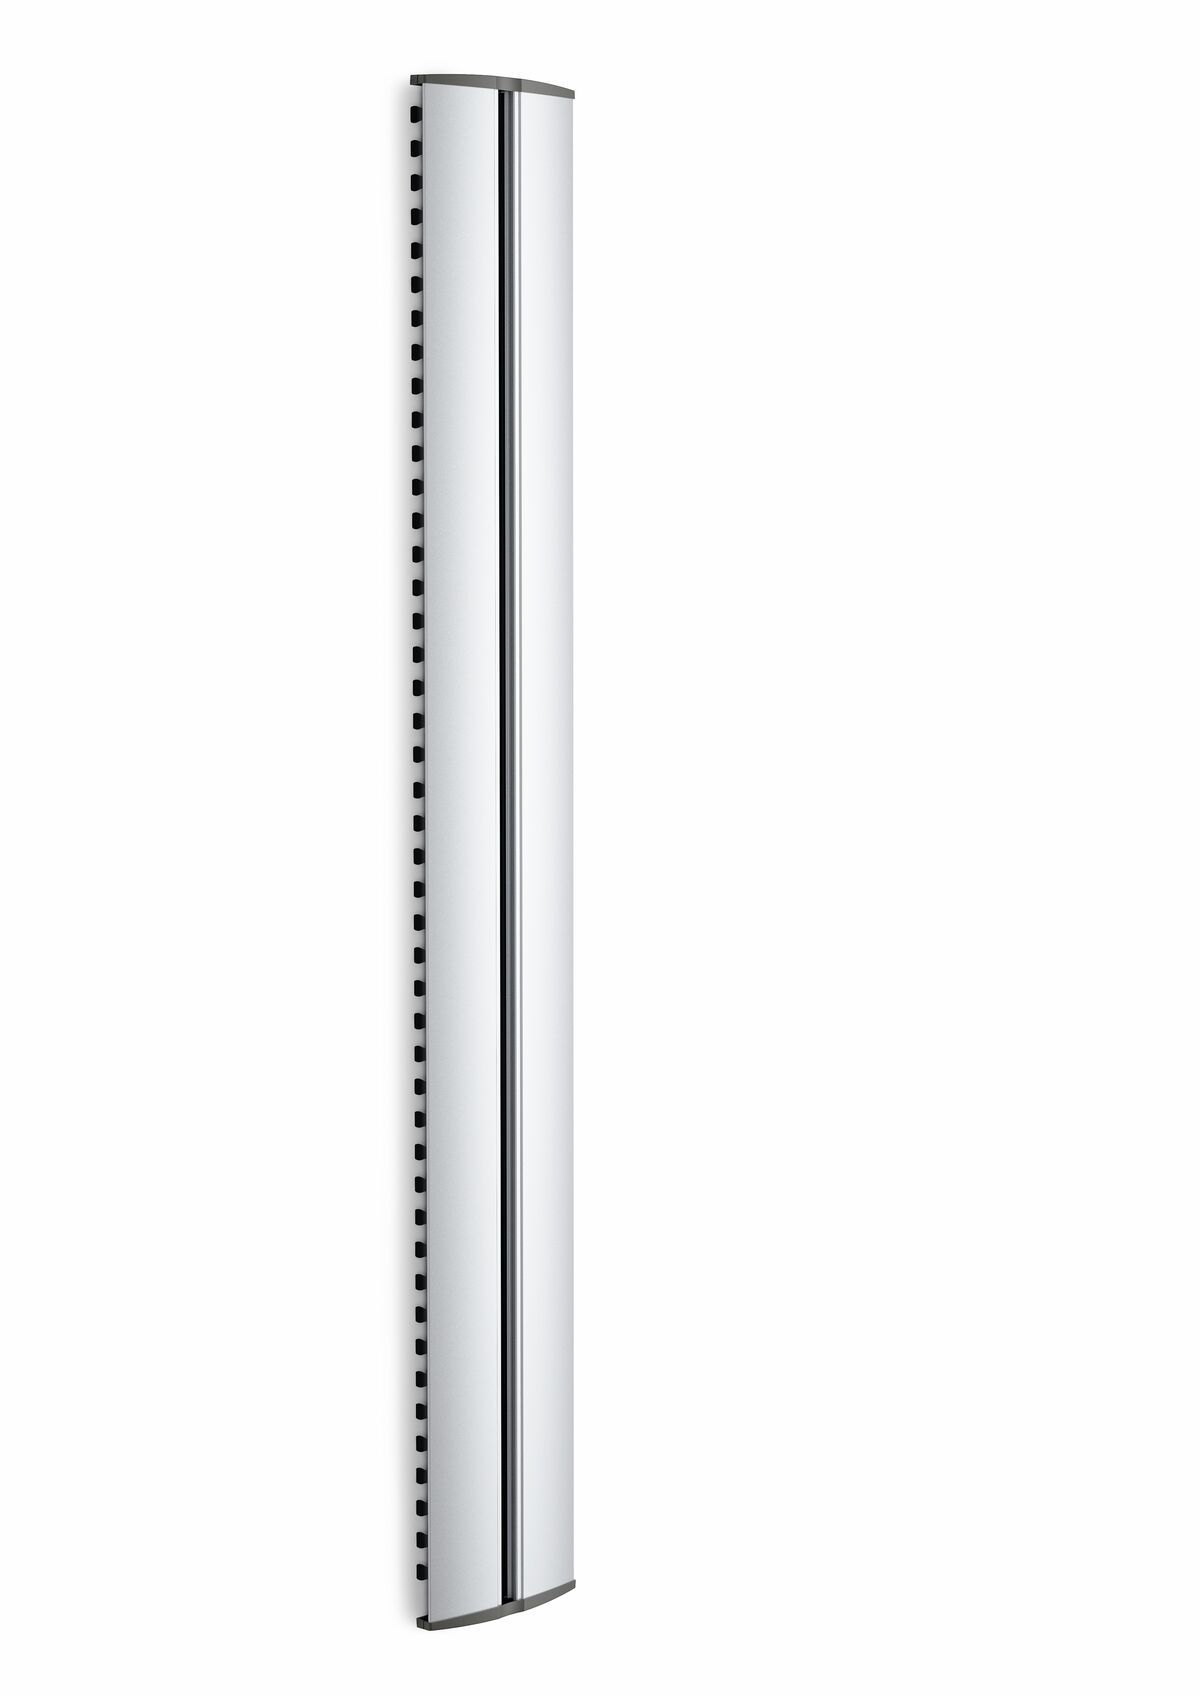 Vogel's CABLE 10 L Columna para cables - Número máx. de cables a sostener: Hasta 10 cables - Longitud: 94 cm - Product